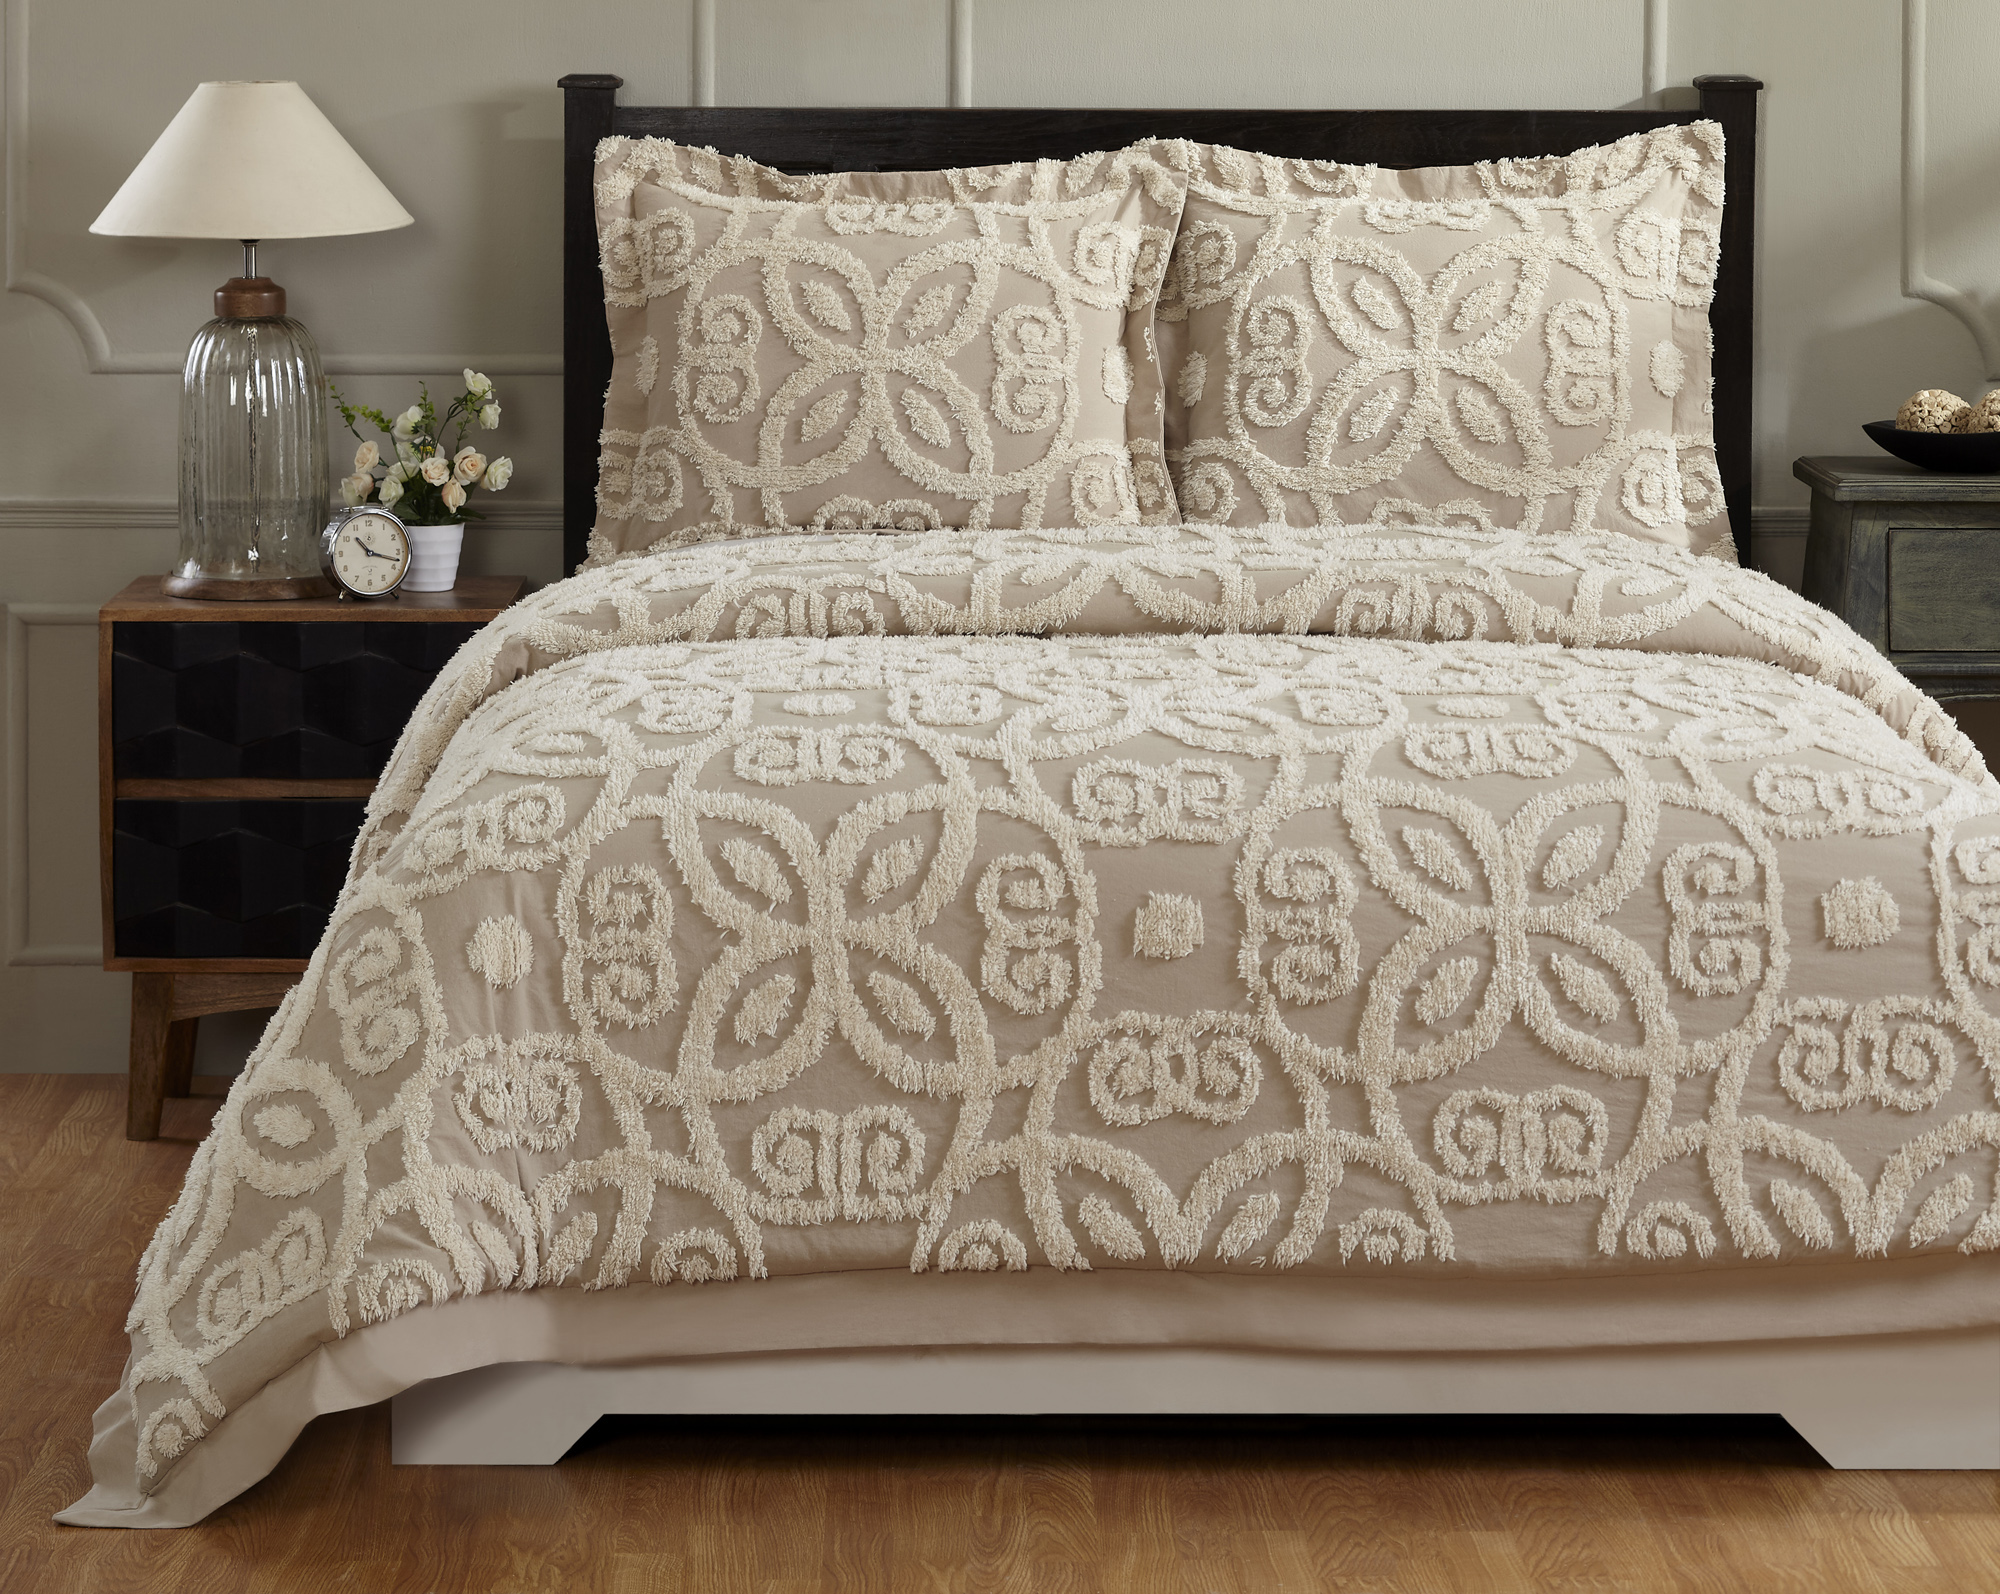 Better Trends Eden Comforter Floral 100% Cotton, Full/Queen, for Adult, Linen/Ivory - image 1 of 4